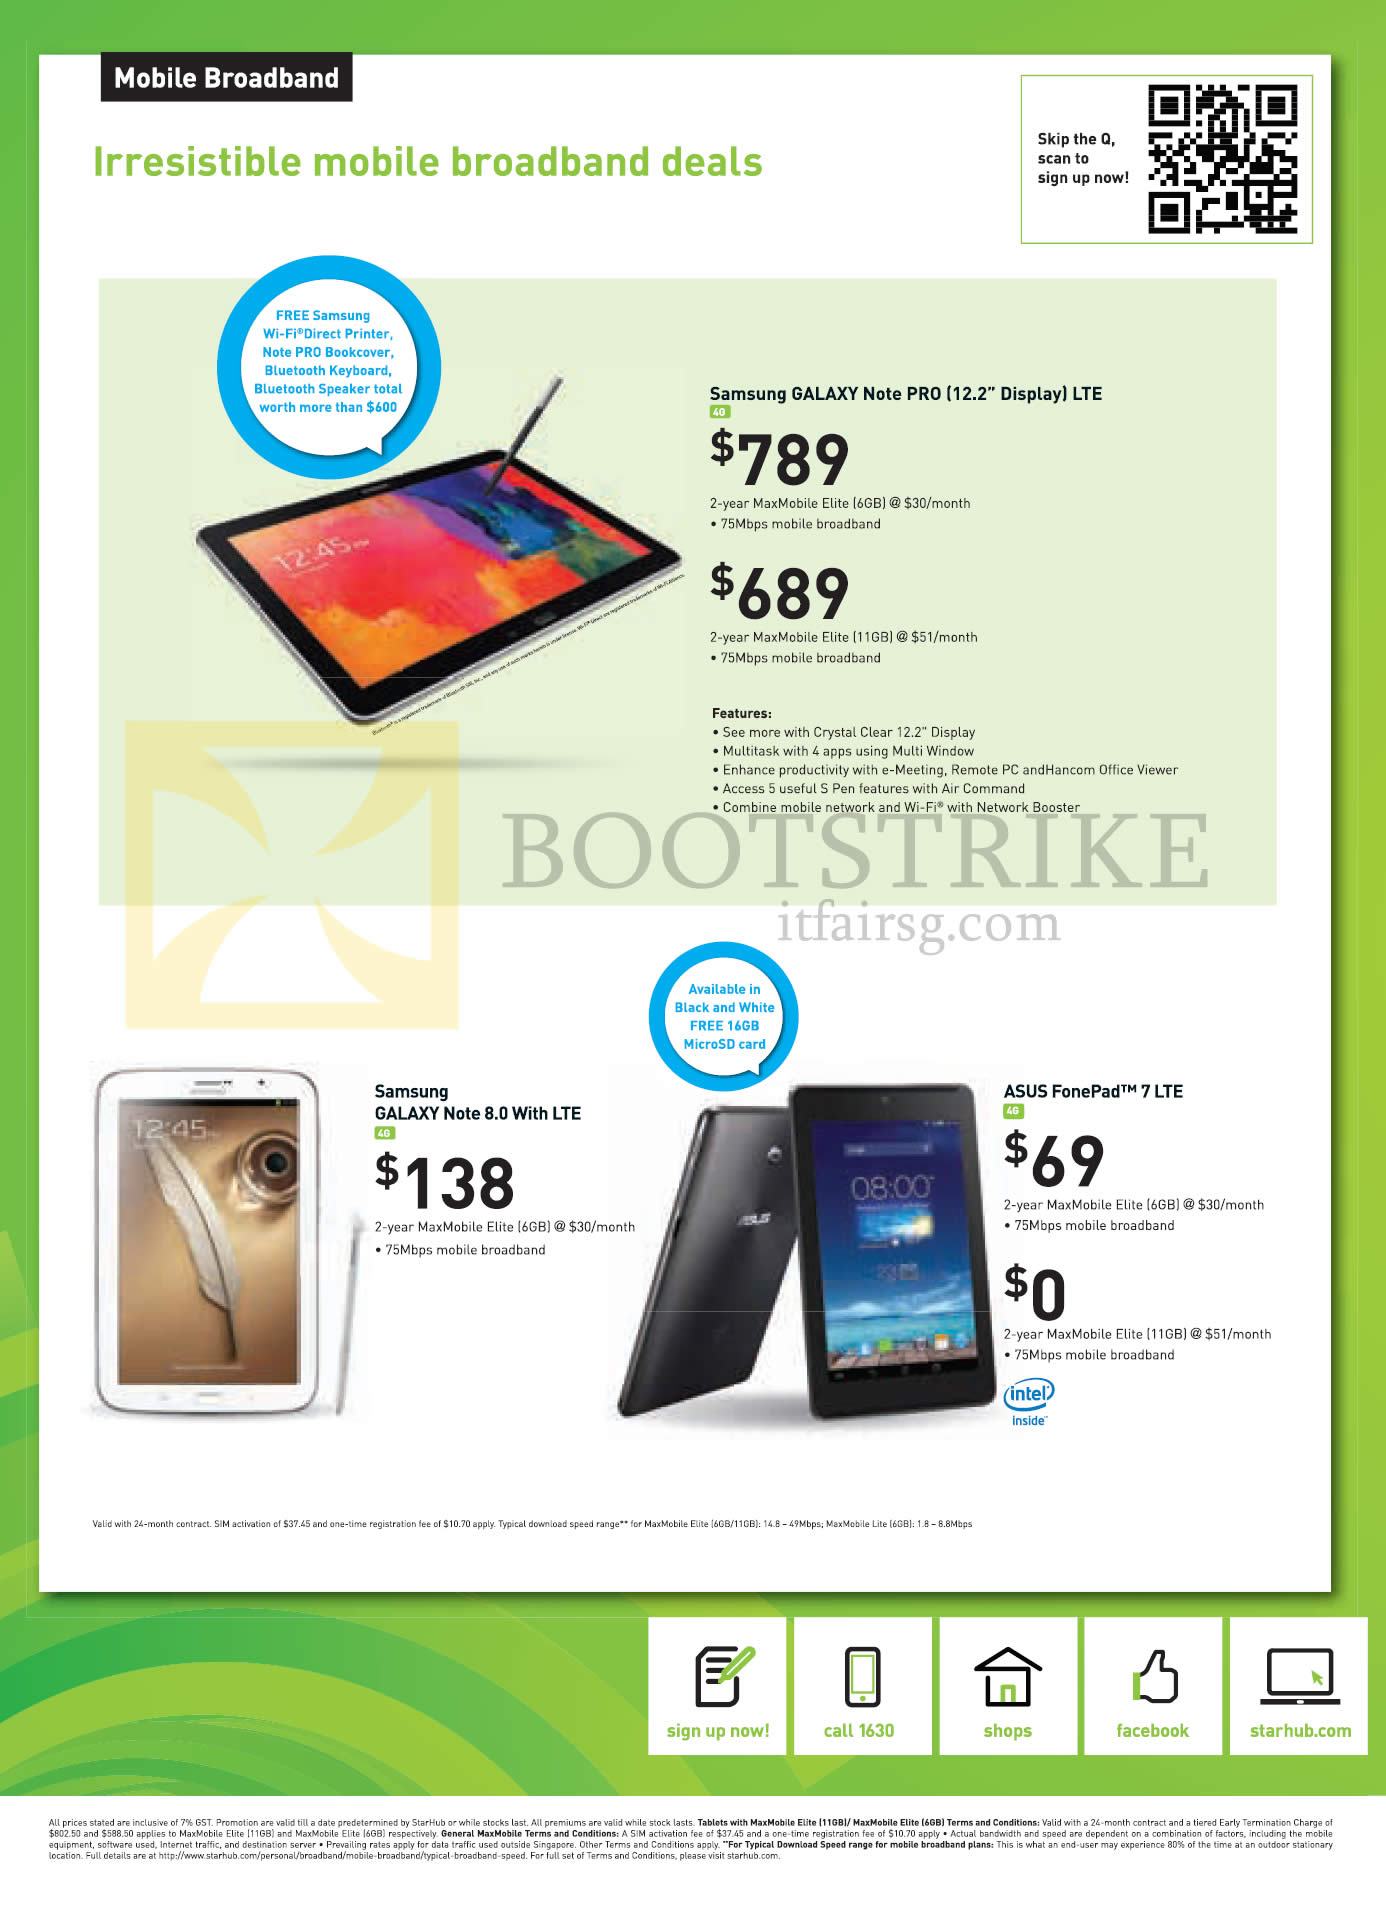 PC SHOW 2014 price list image brochure of Starhub Mobile Broadband Galaxy Note Pro 12.2, Samsung Galaxy Note 8.0, ASUS FonePad